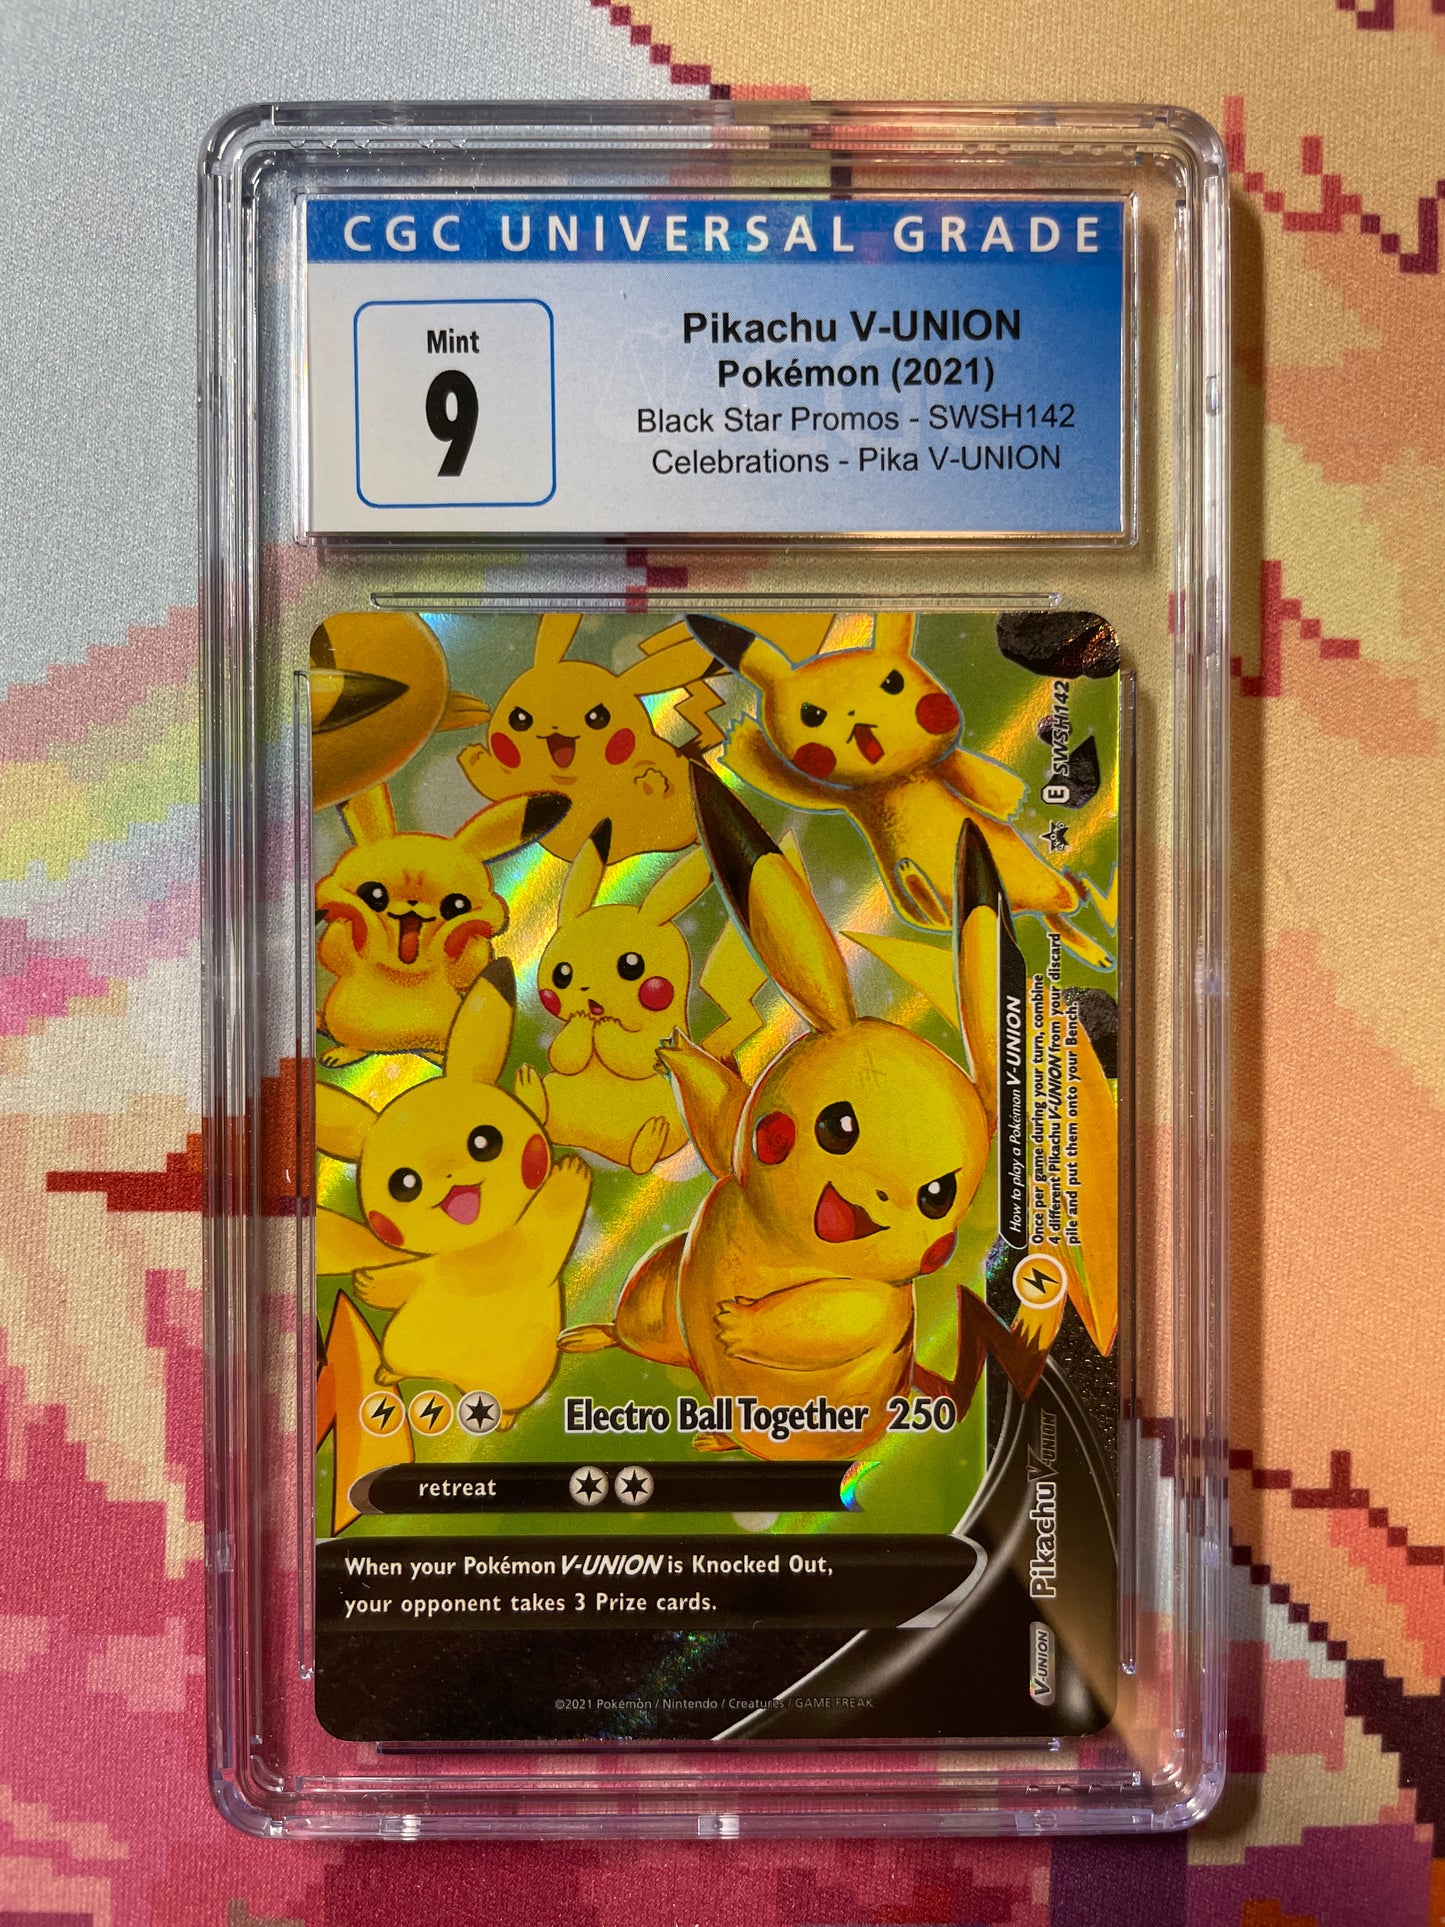 Pikachu V-UNION PR-SW SWSH142